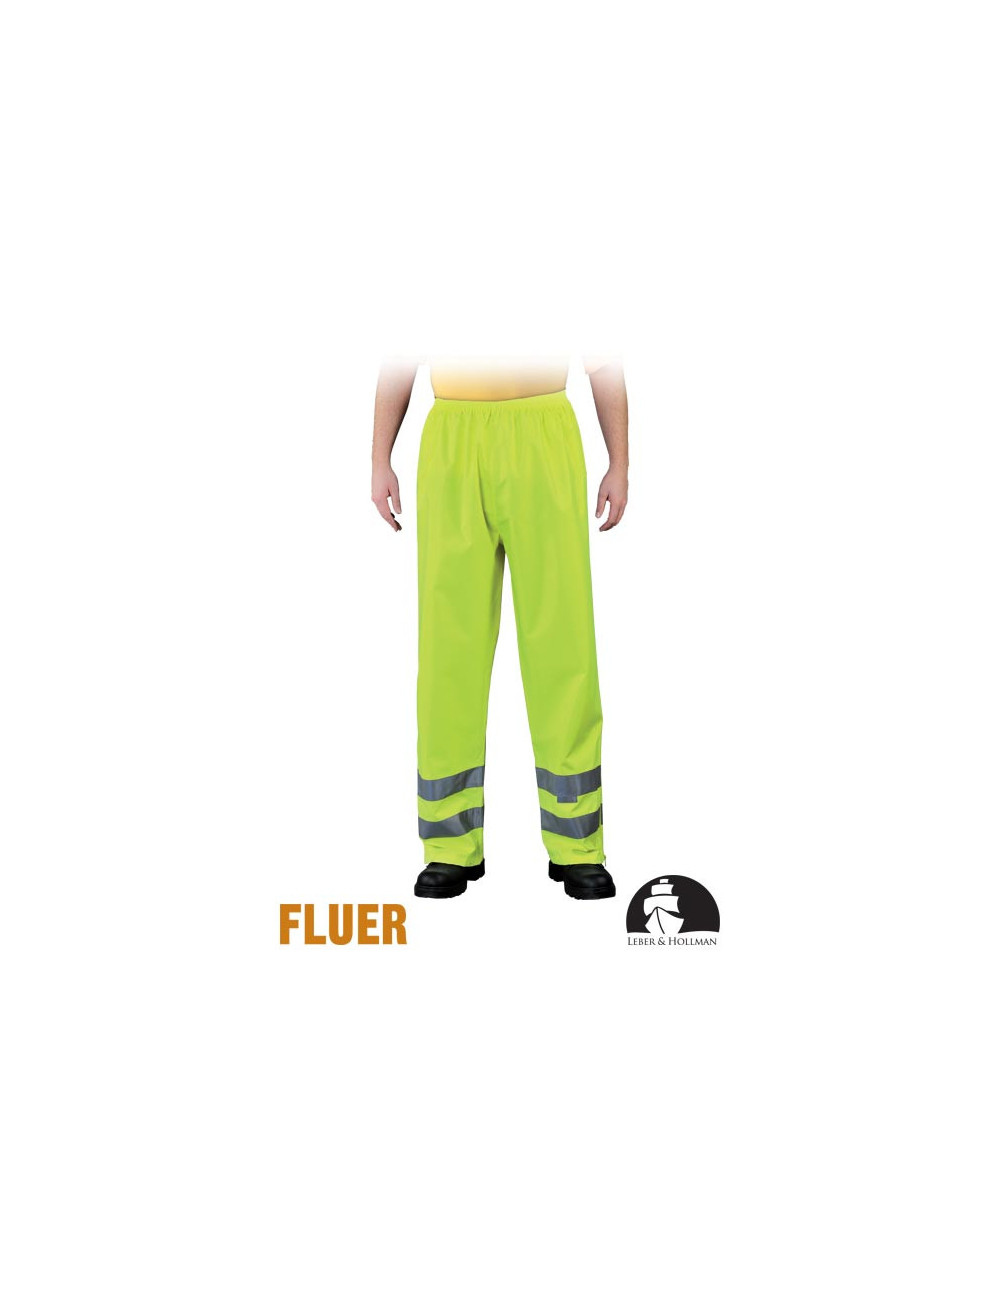 Spodnie ochronne do pasa lh-fluer-t y żółty Leber&hollman